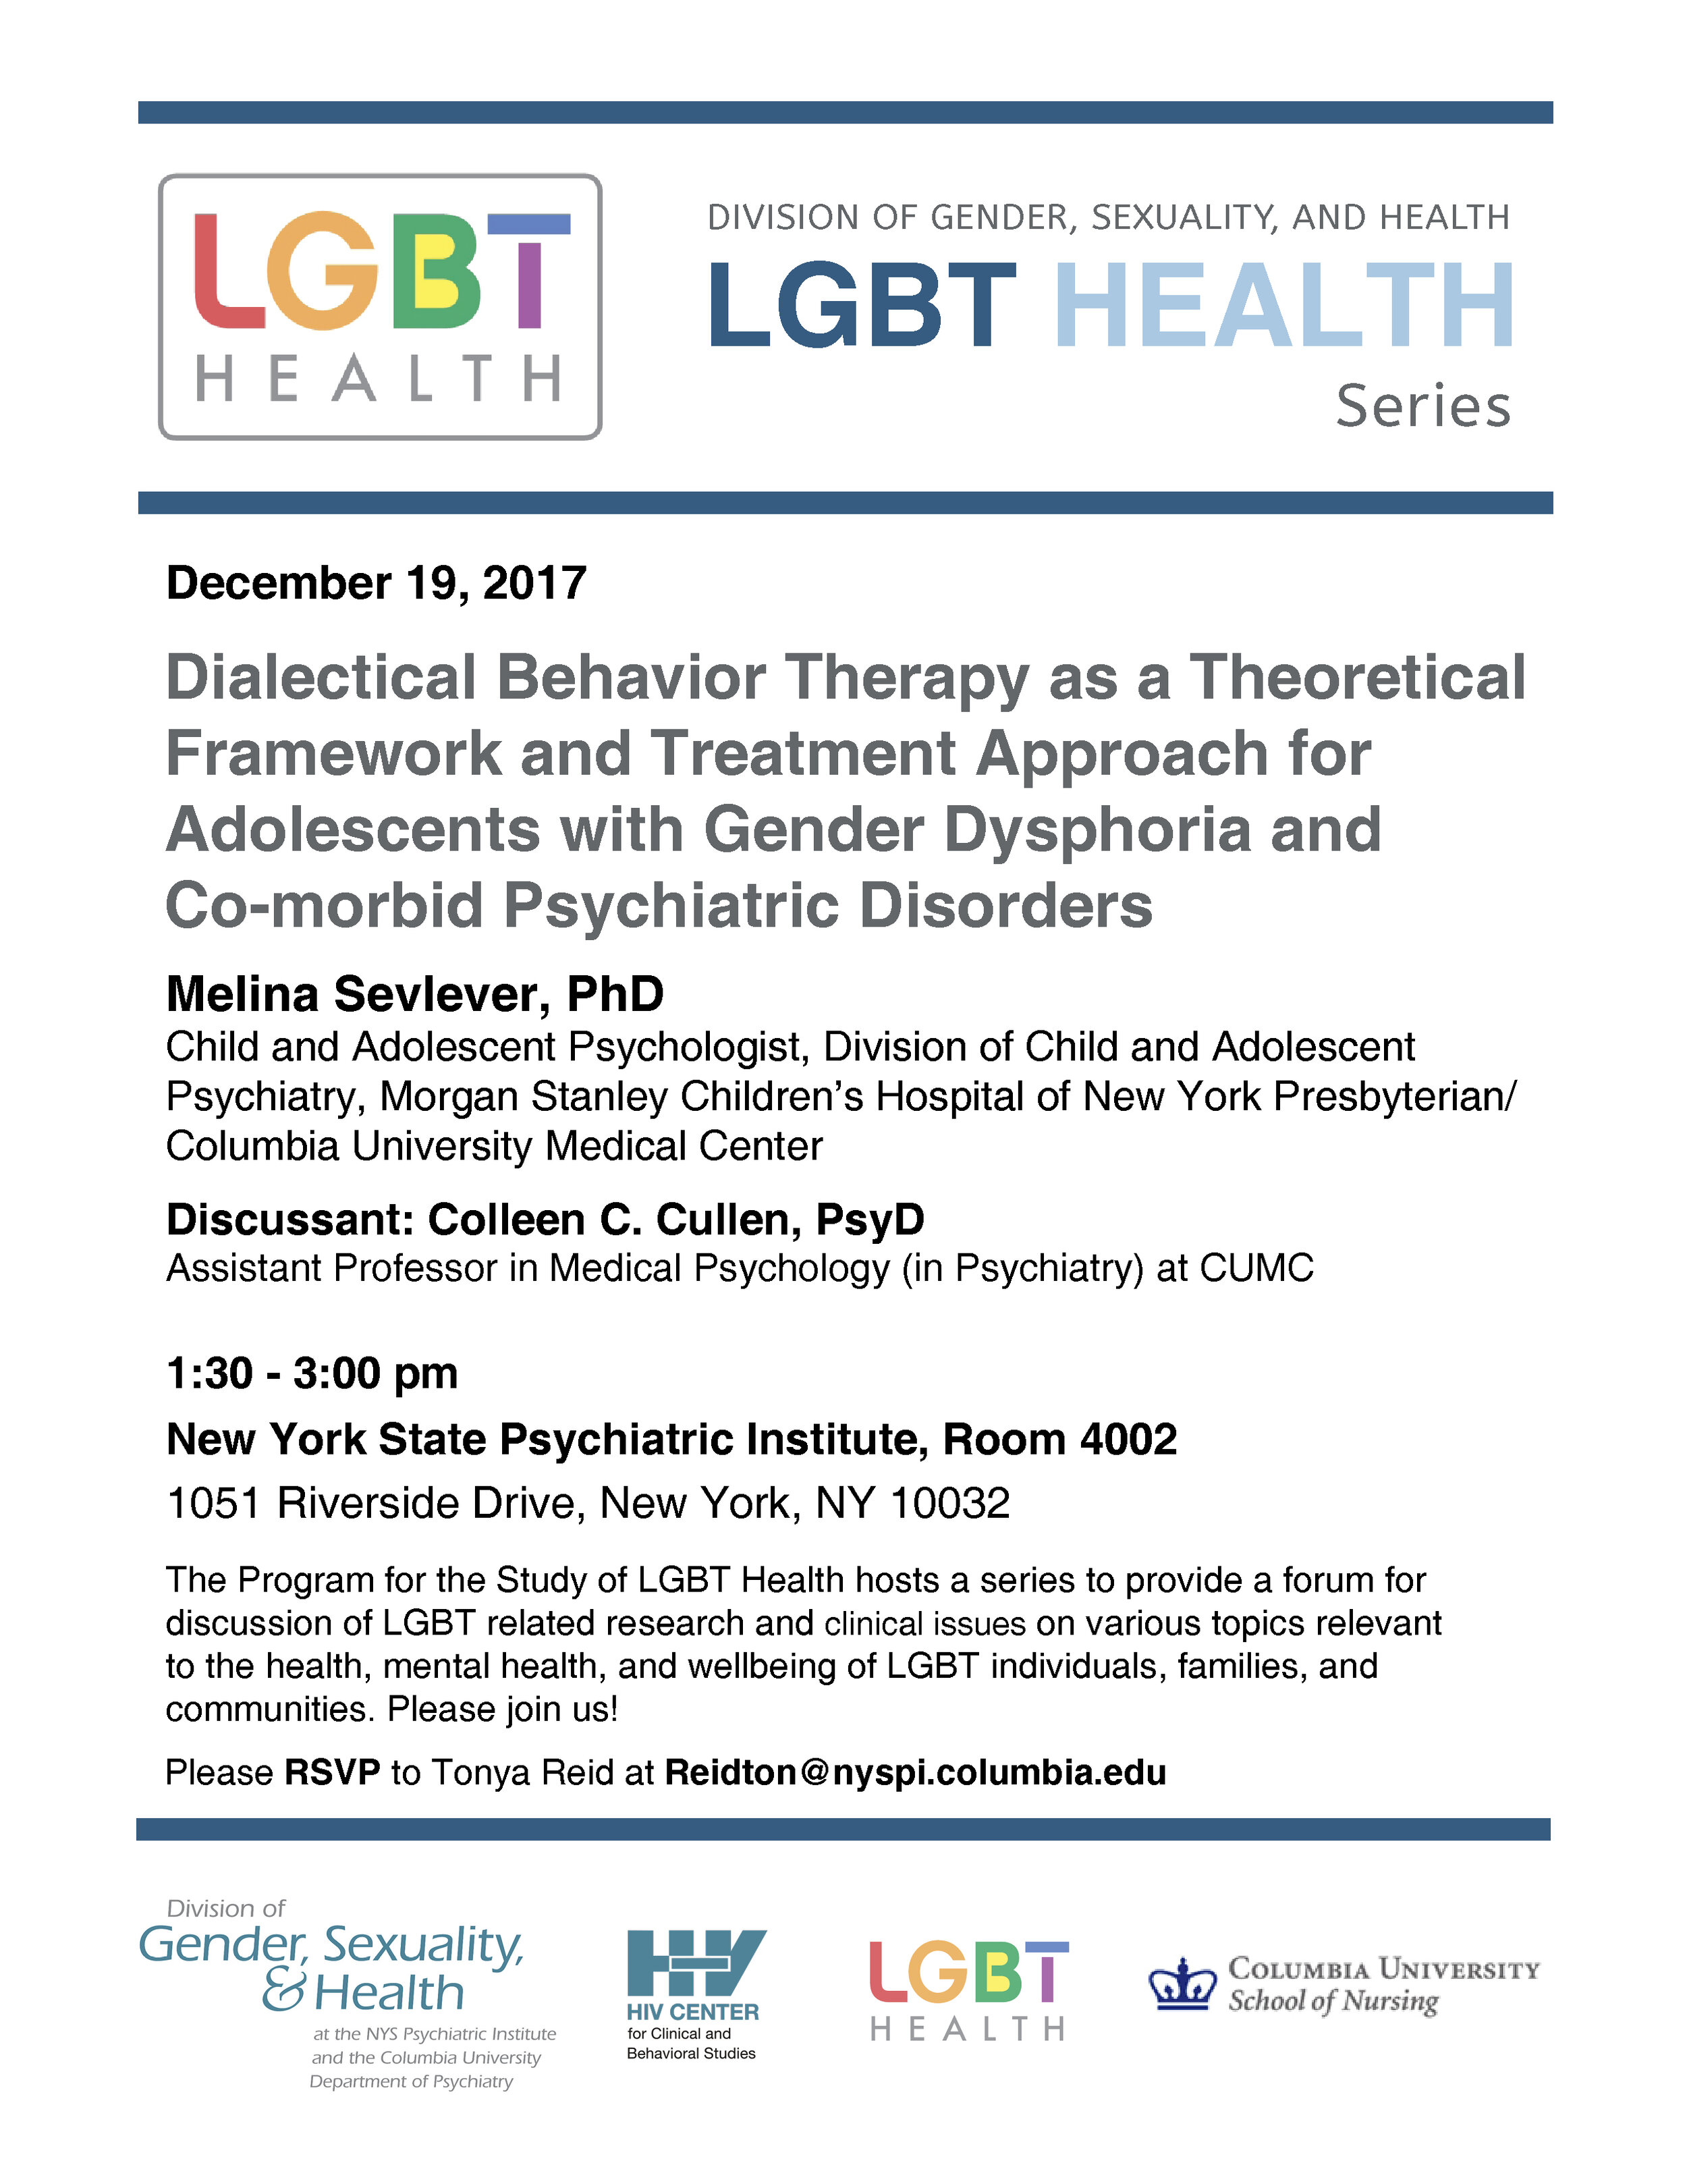 LGBT Health Series Dec 19 2017.jpg